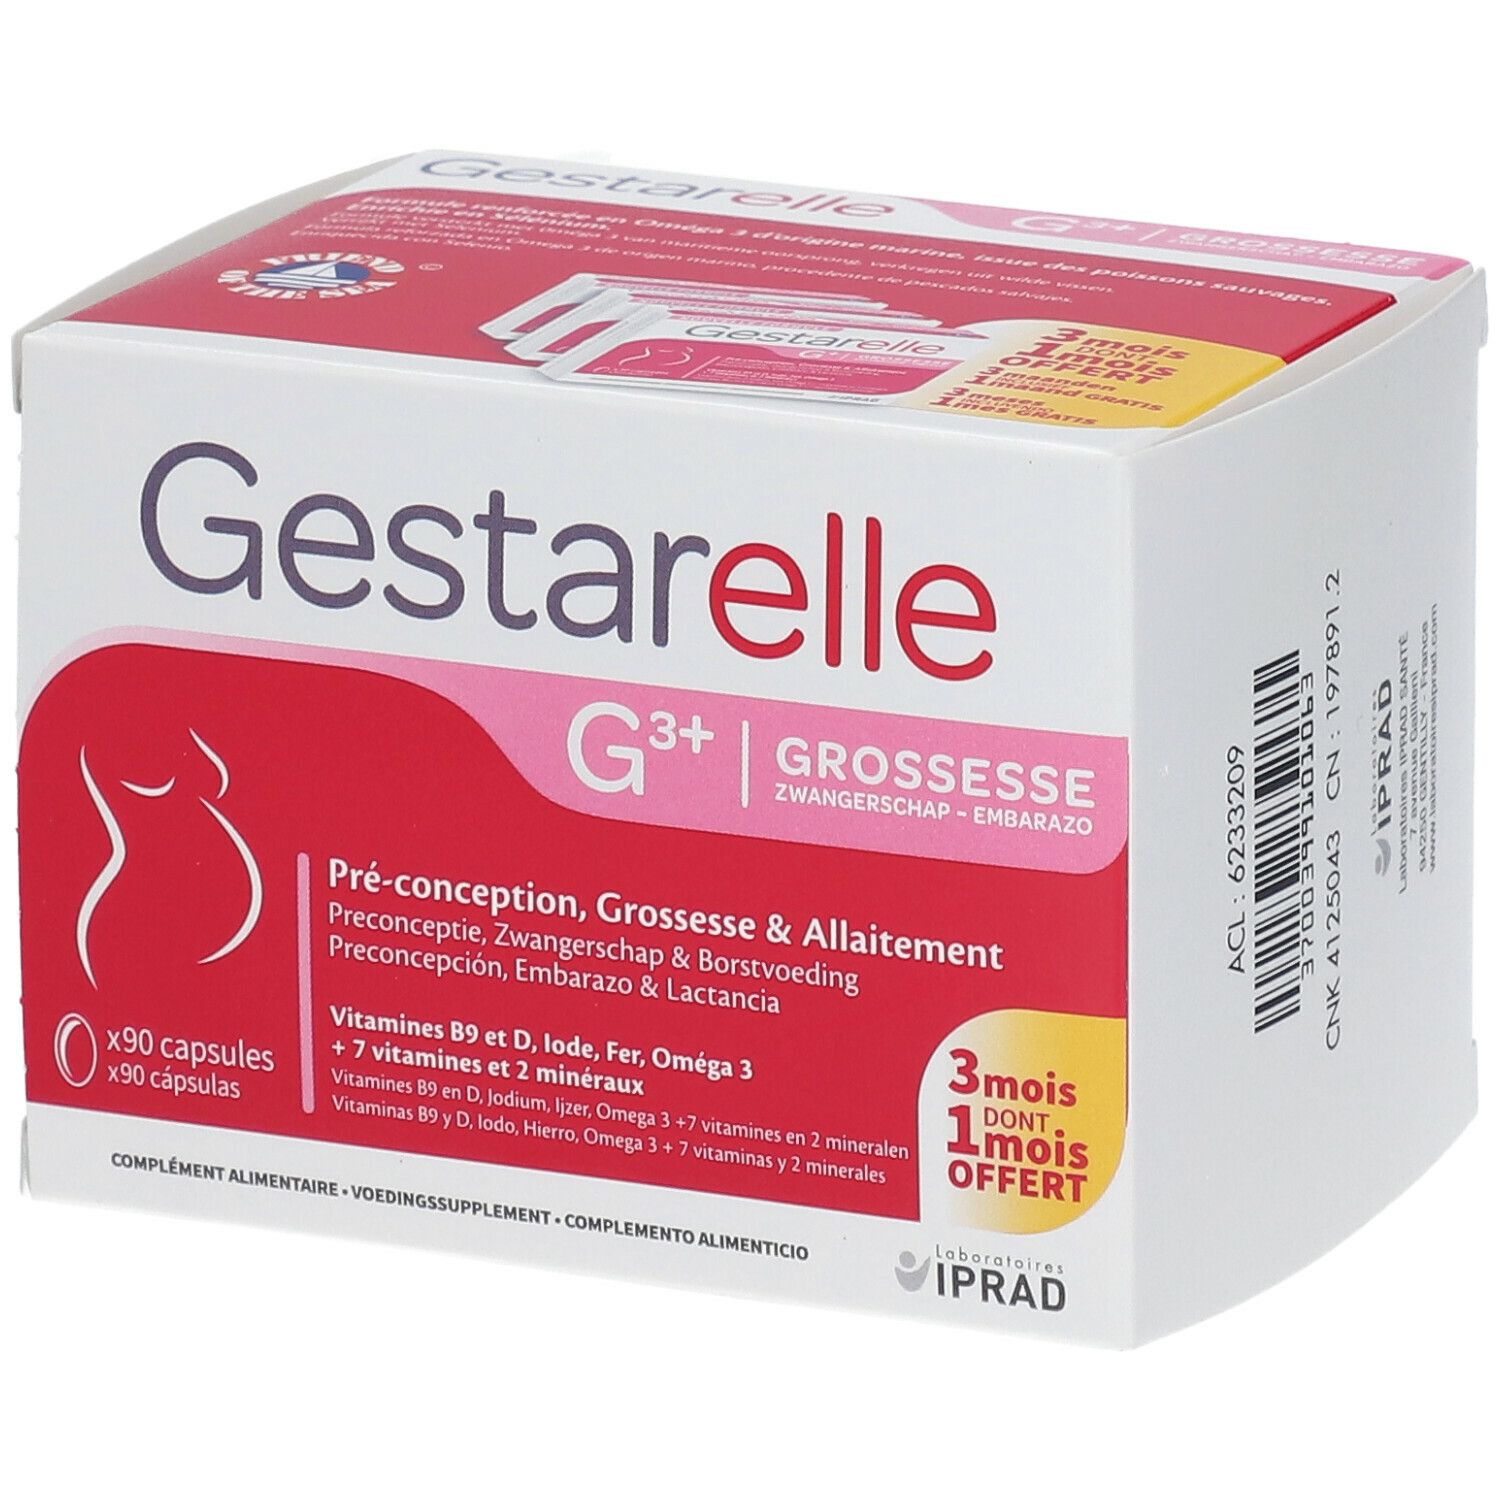 Gestarelle G3+ grossesse - 90 capsules